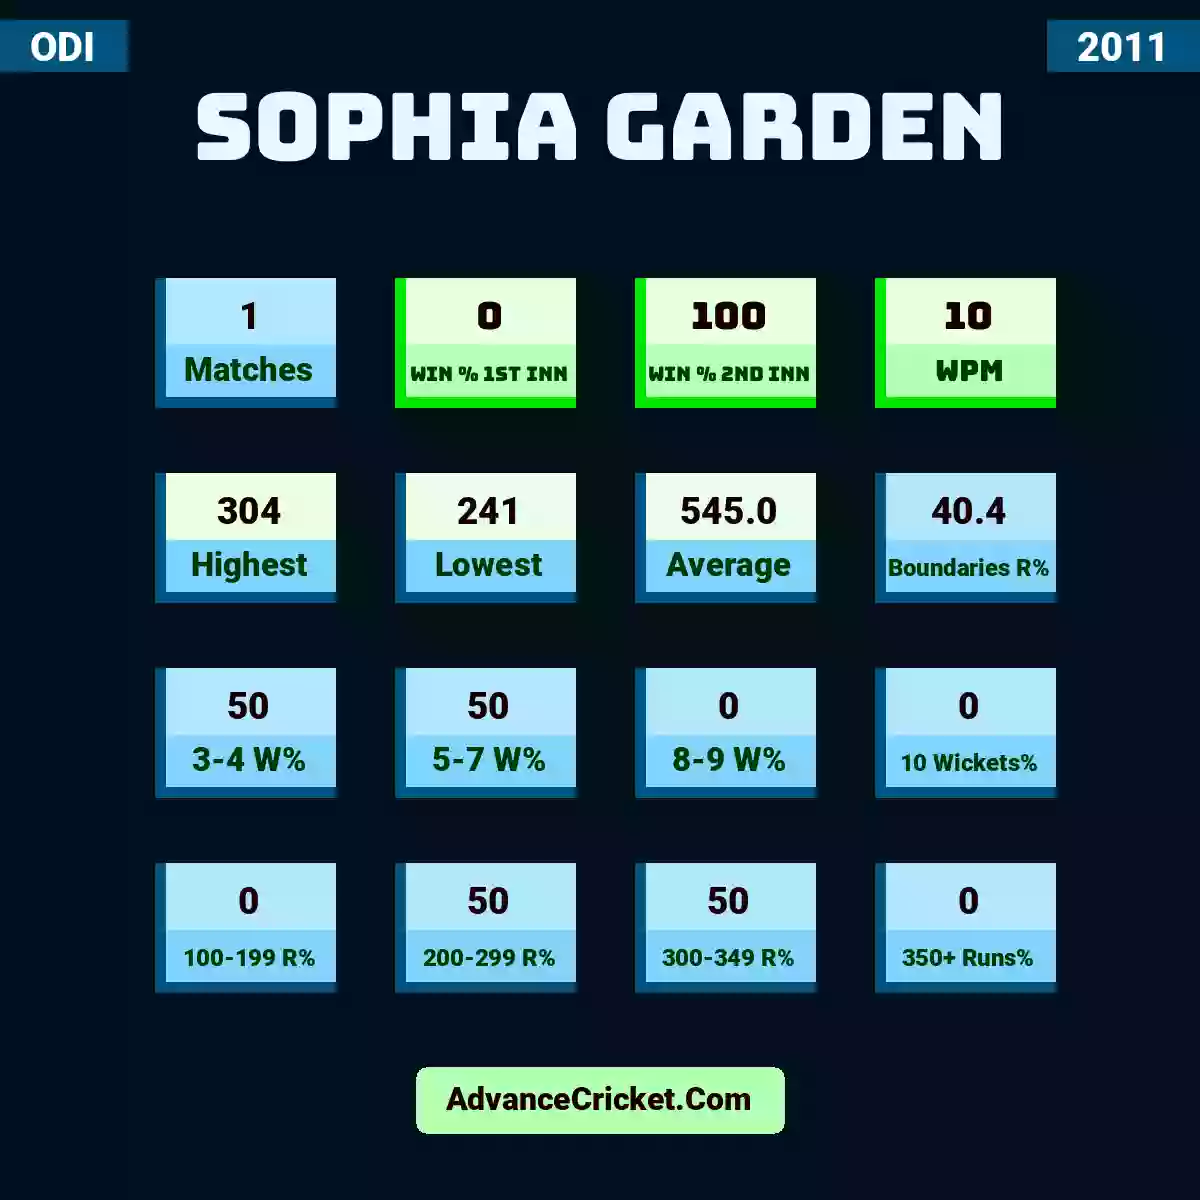 Image showing Sophia Garden with Matches: 1, Win % 1st Inn: 0, Win % 2nd Inn: 100, WPM: 10, Highest: 304, Lowest: 241, Average: 545.0, Boundaries R%: 40.4, 3-4 W%: 50, 5-7 W%: 50, 8-9 W%: 0, 10 Wickets%: 0, 100-199 R%: 0, 200-299 R%: 50, 300-349 R%: 50, 350+ Runs%: 0.